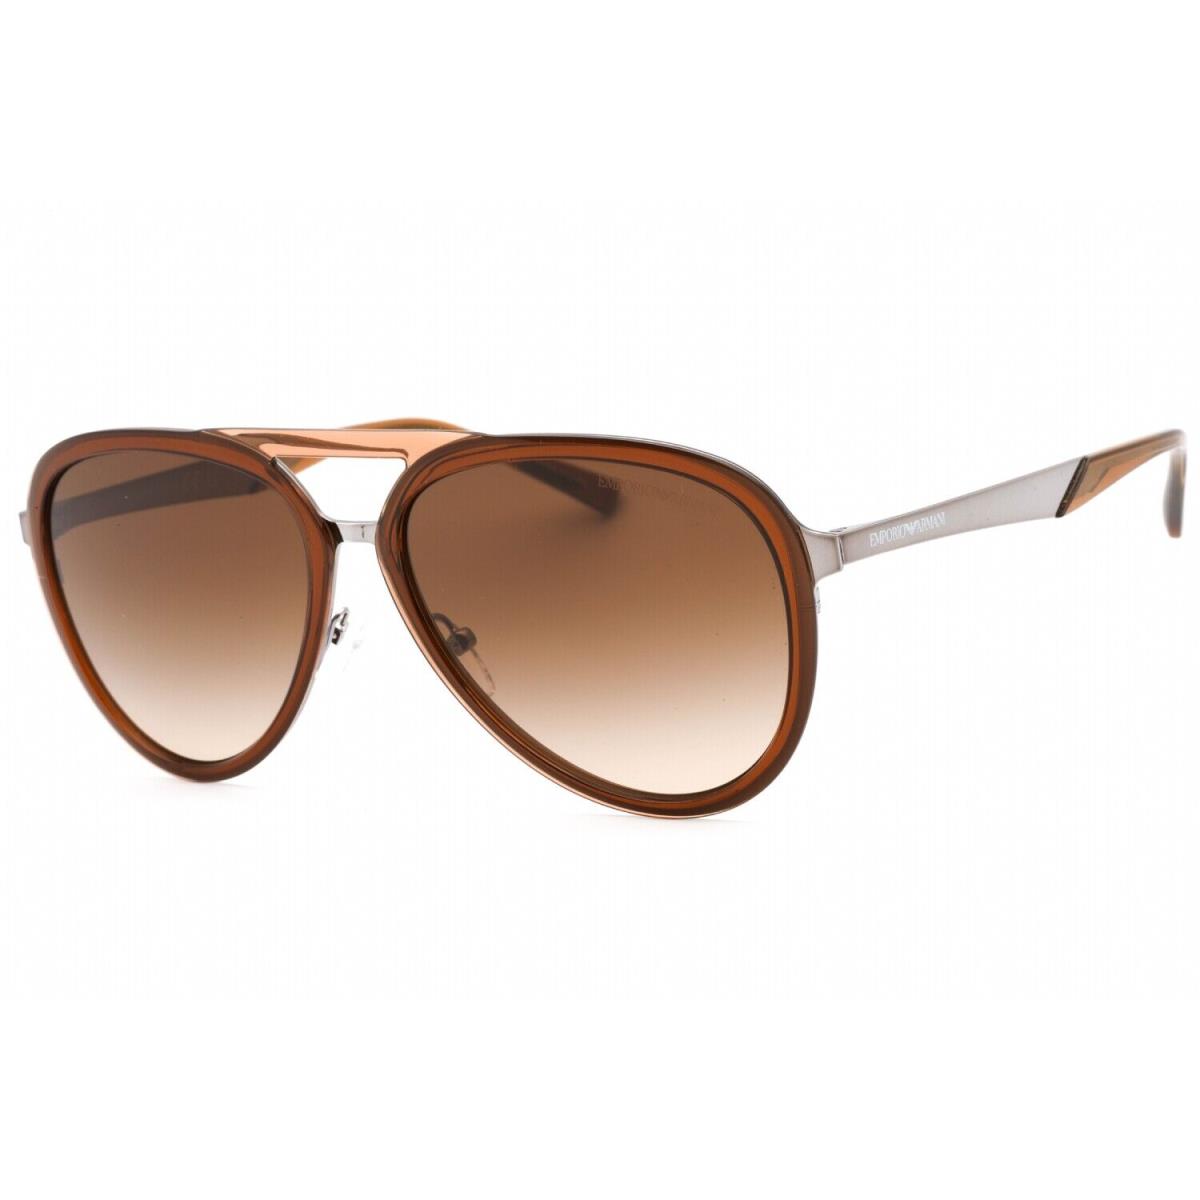 Emporio Armani EA2145 336013 Sunglasses Transparent Brown Frame Gradient Brown